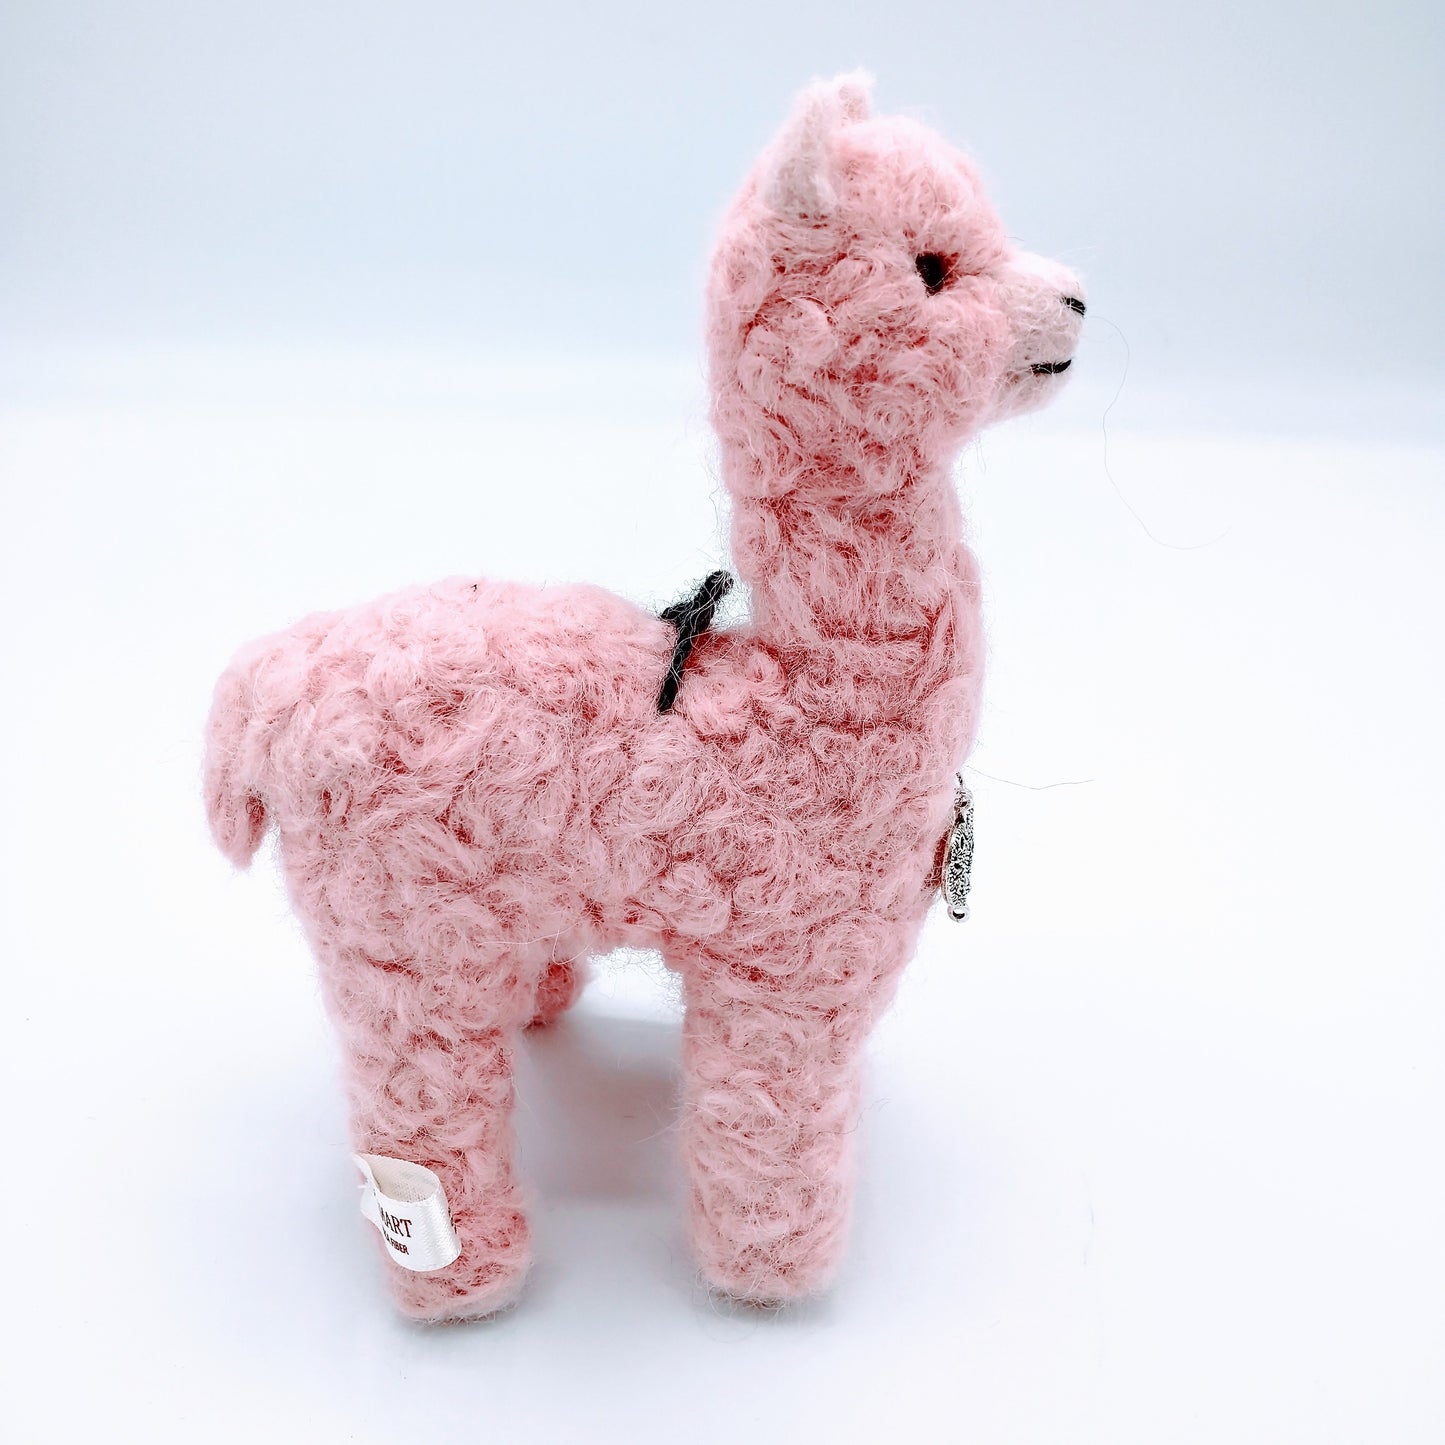 Alpaca Fiber Sculpture in pink